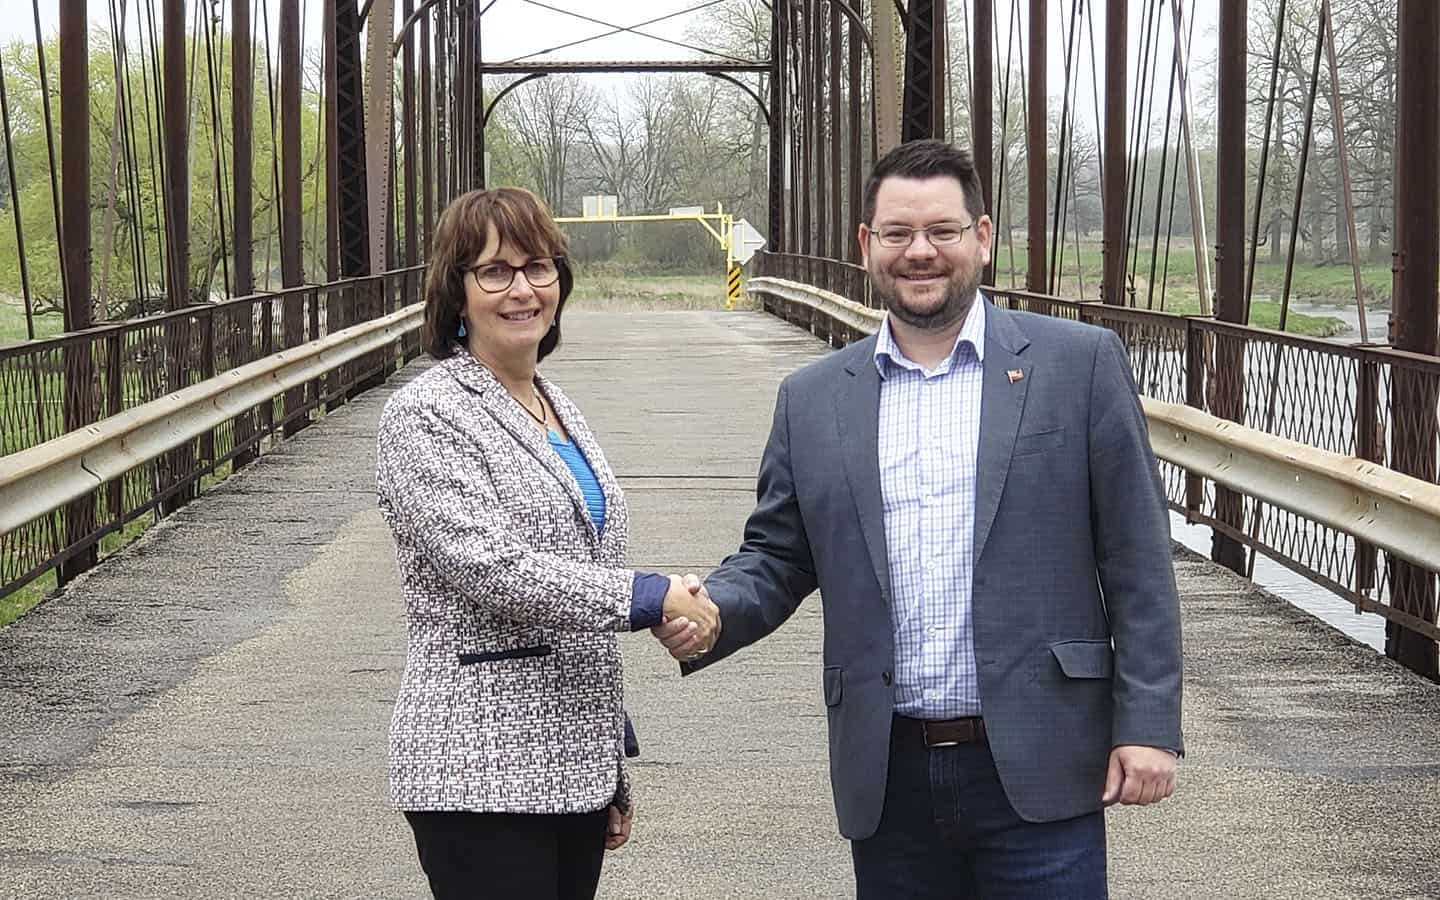 Province signals funding support to rehab Glasgow St. bridge in Conestogo